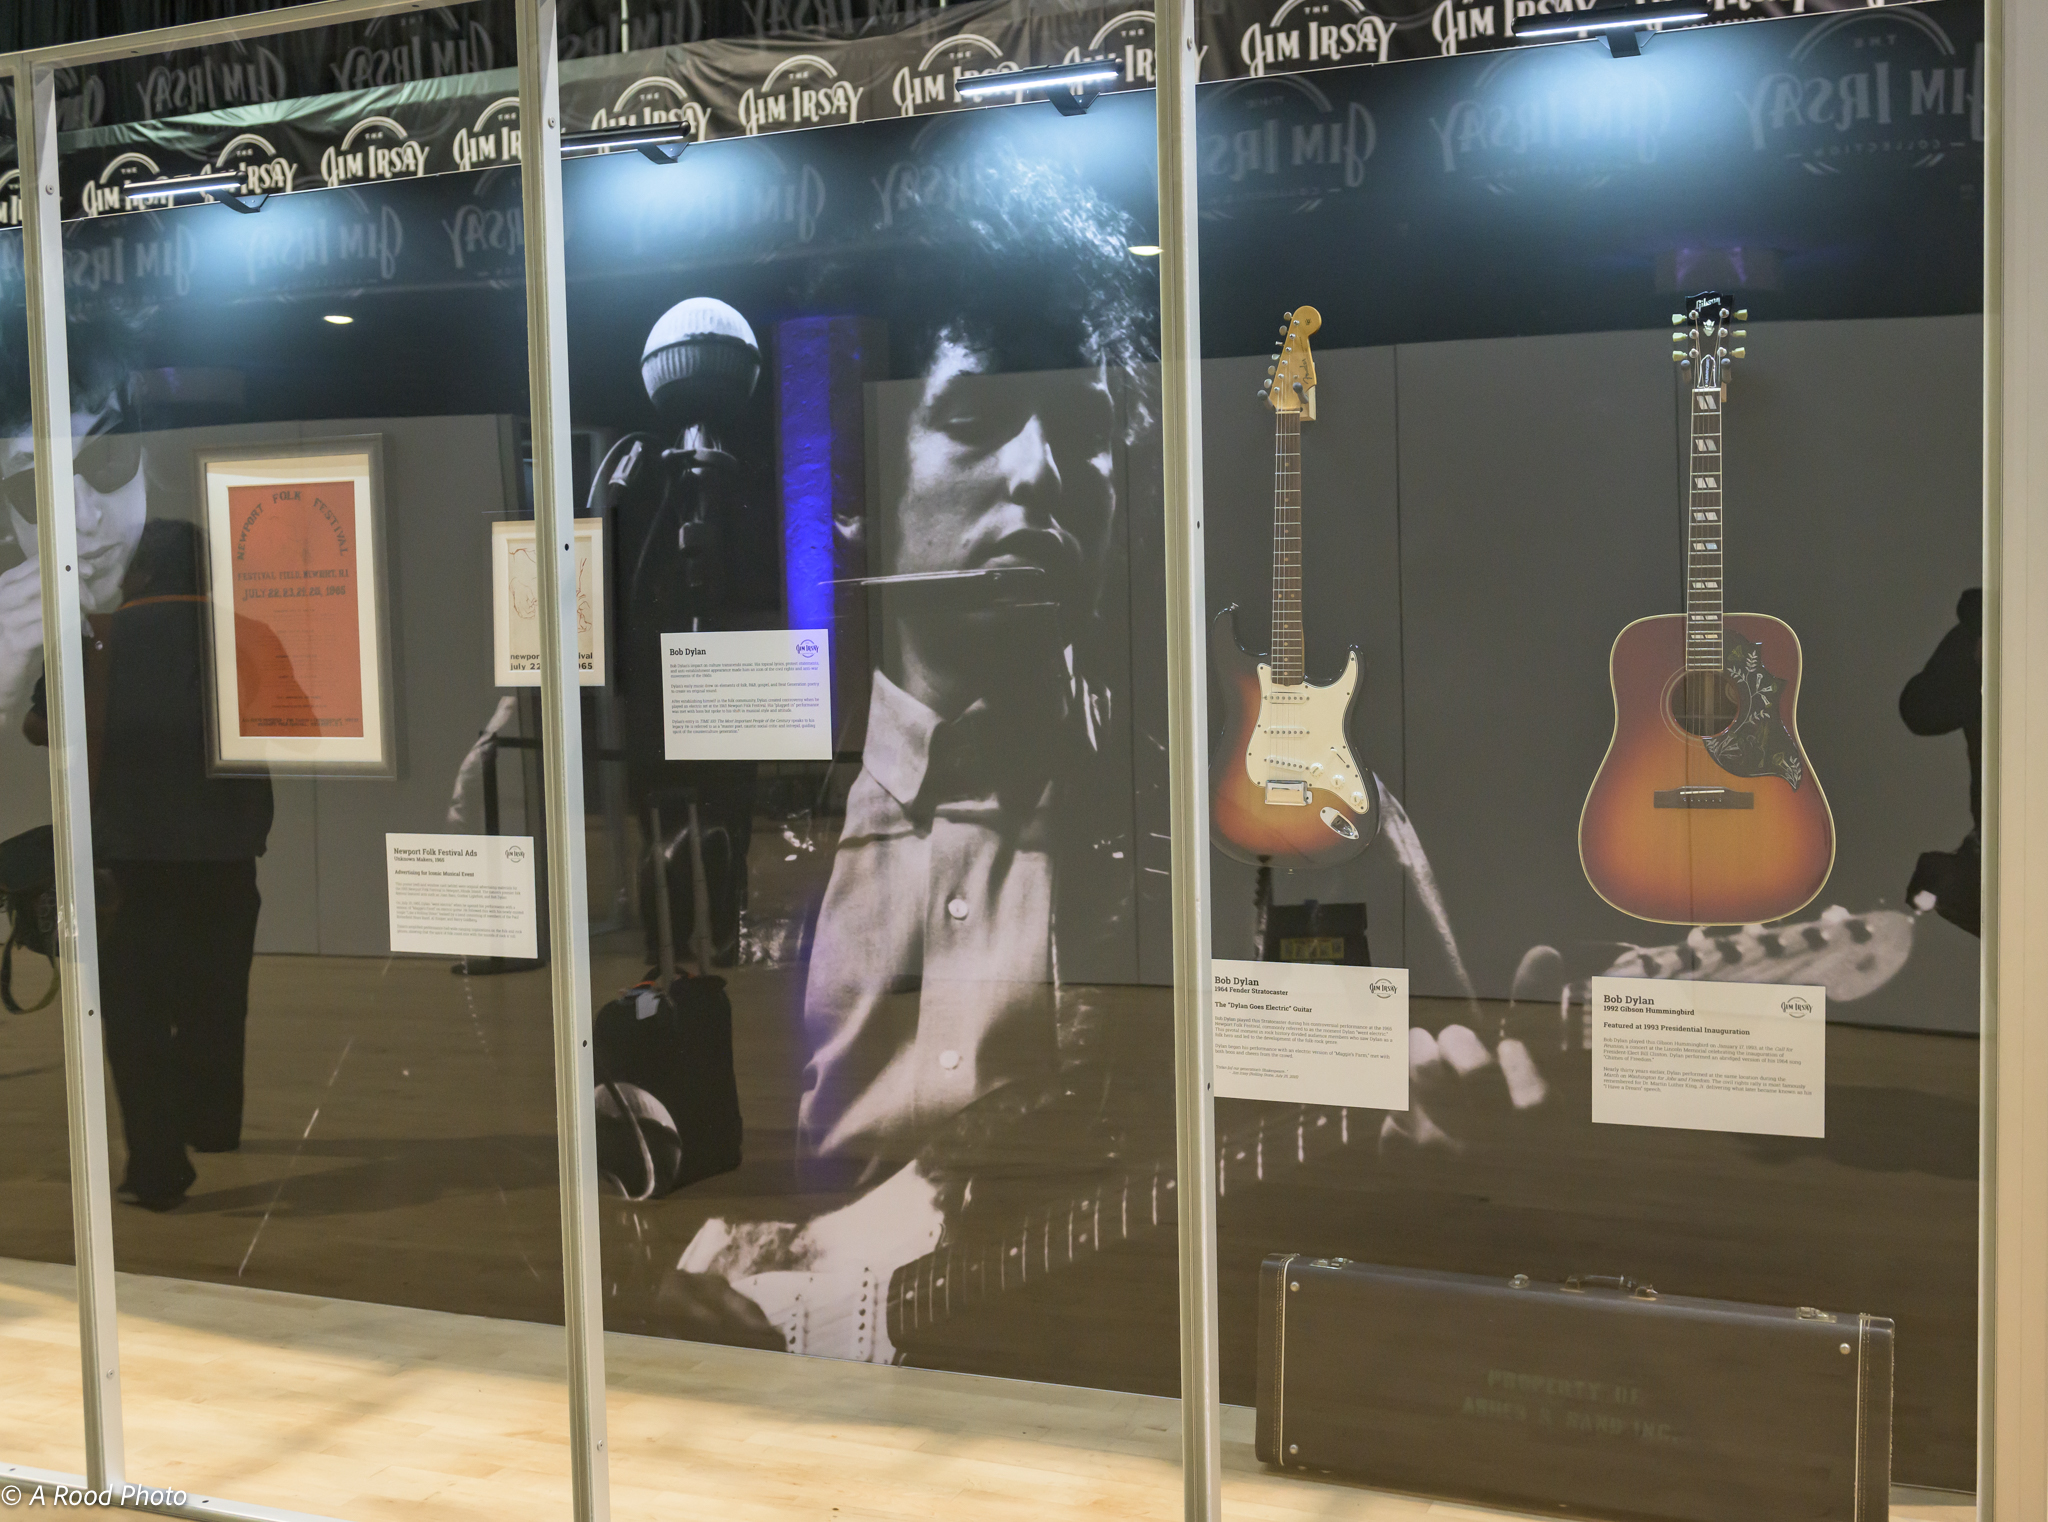 Jim Irsay Collection Exhibit & Concert